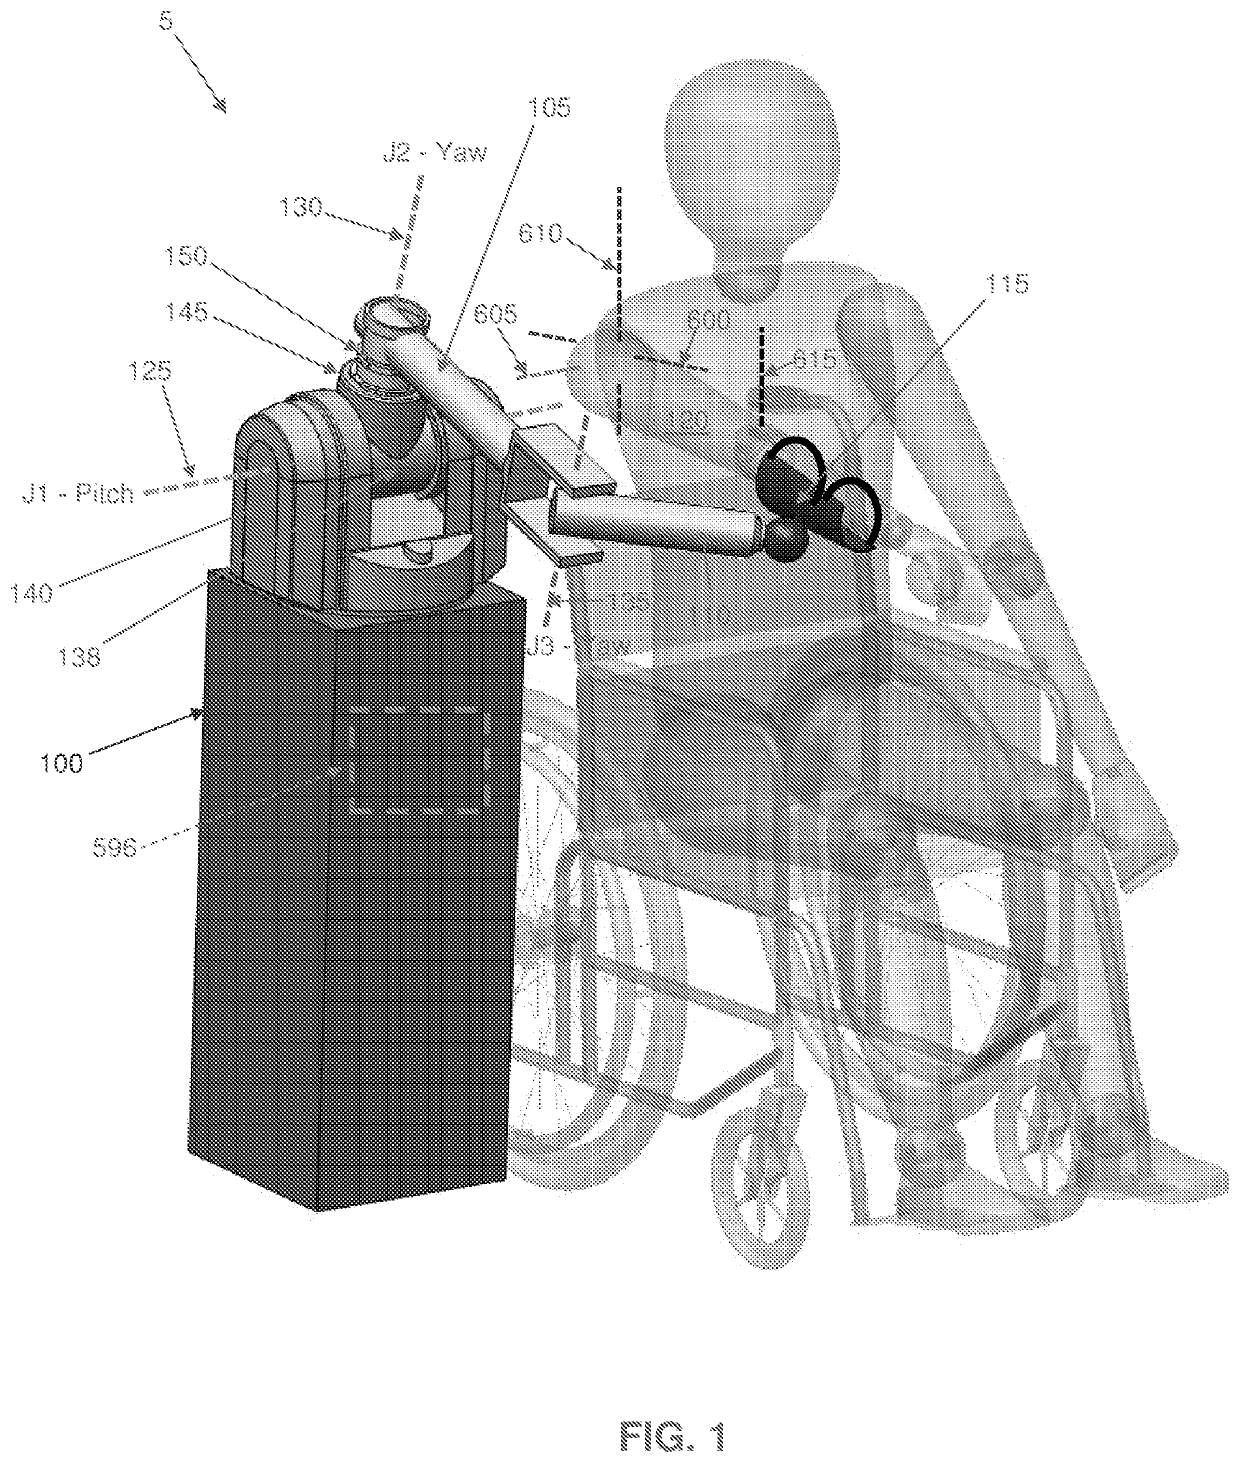 Multi-active-axis, non-exoskeletal rehabilitation device